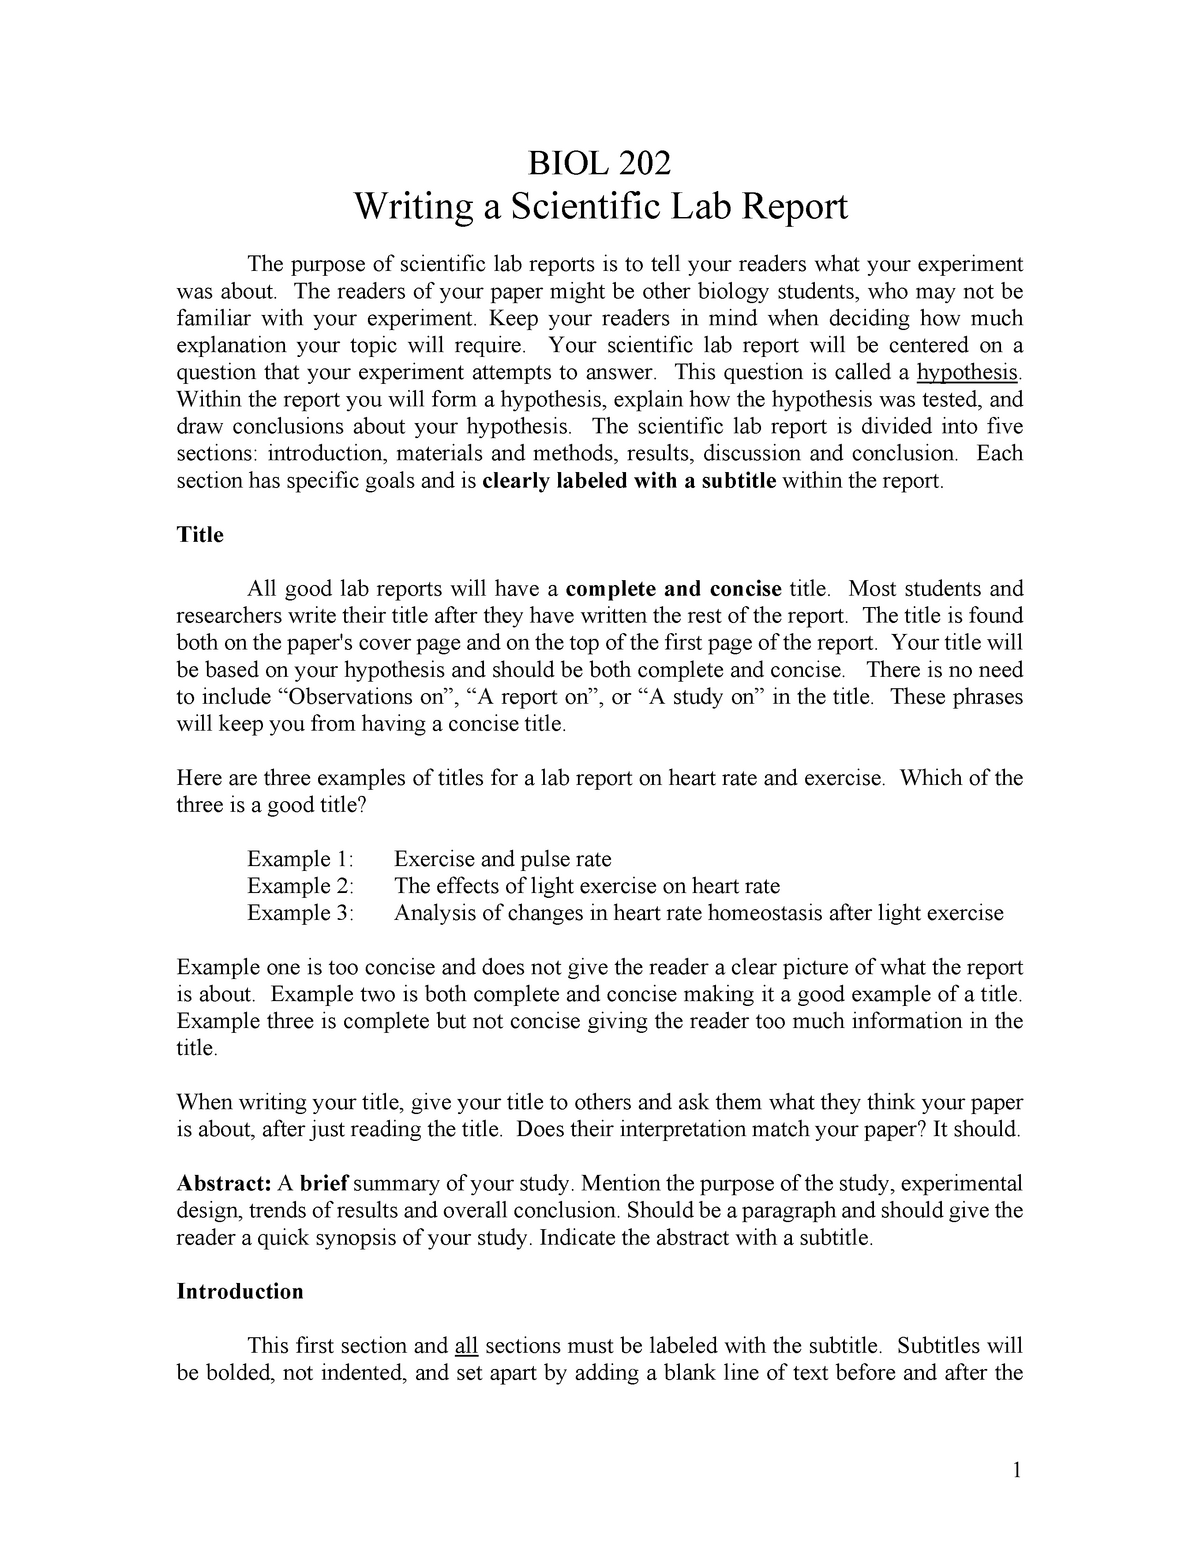 matrix education how to write a scientific report